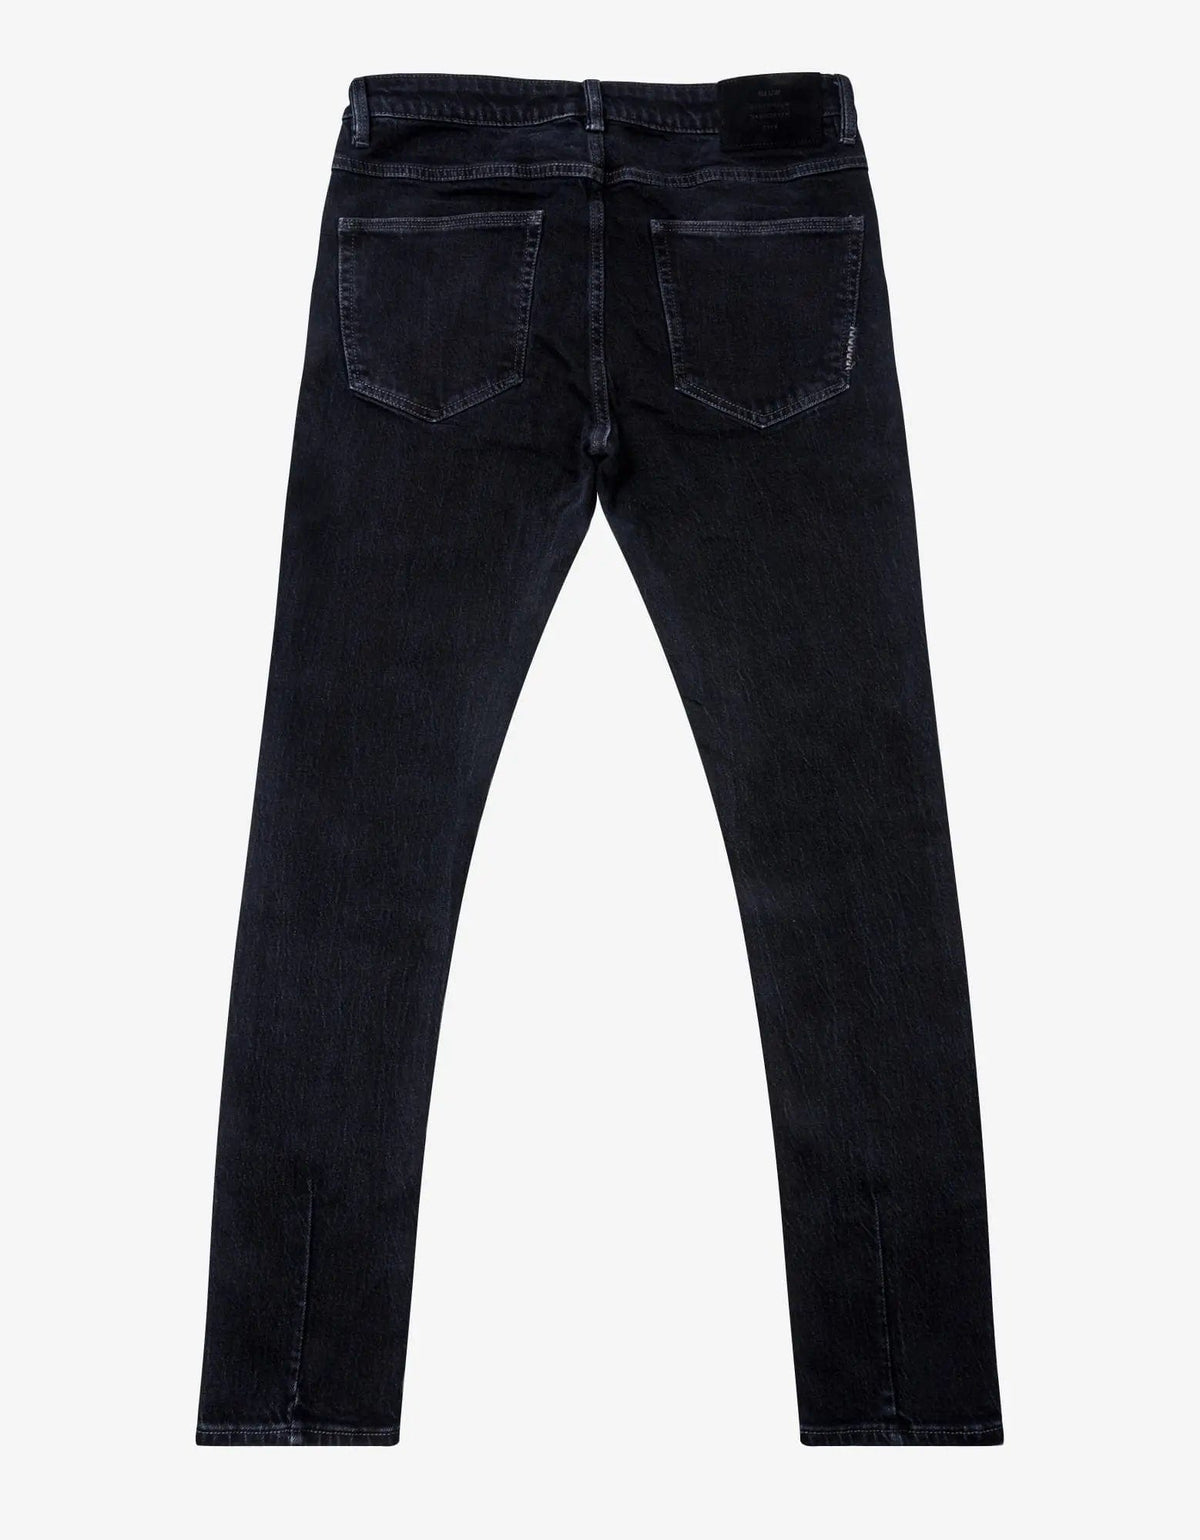 Neuw Neuw Rebel Skinny Unguarded Washed Black Jeans